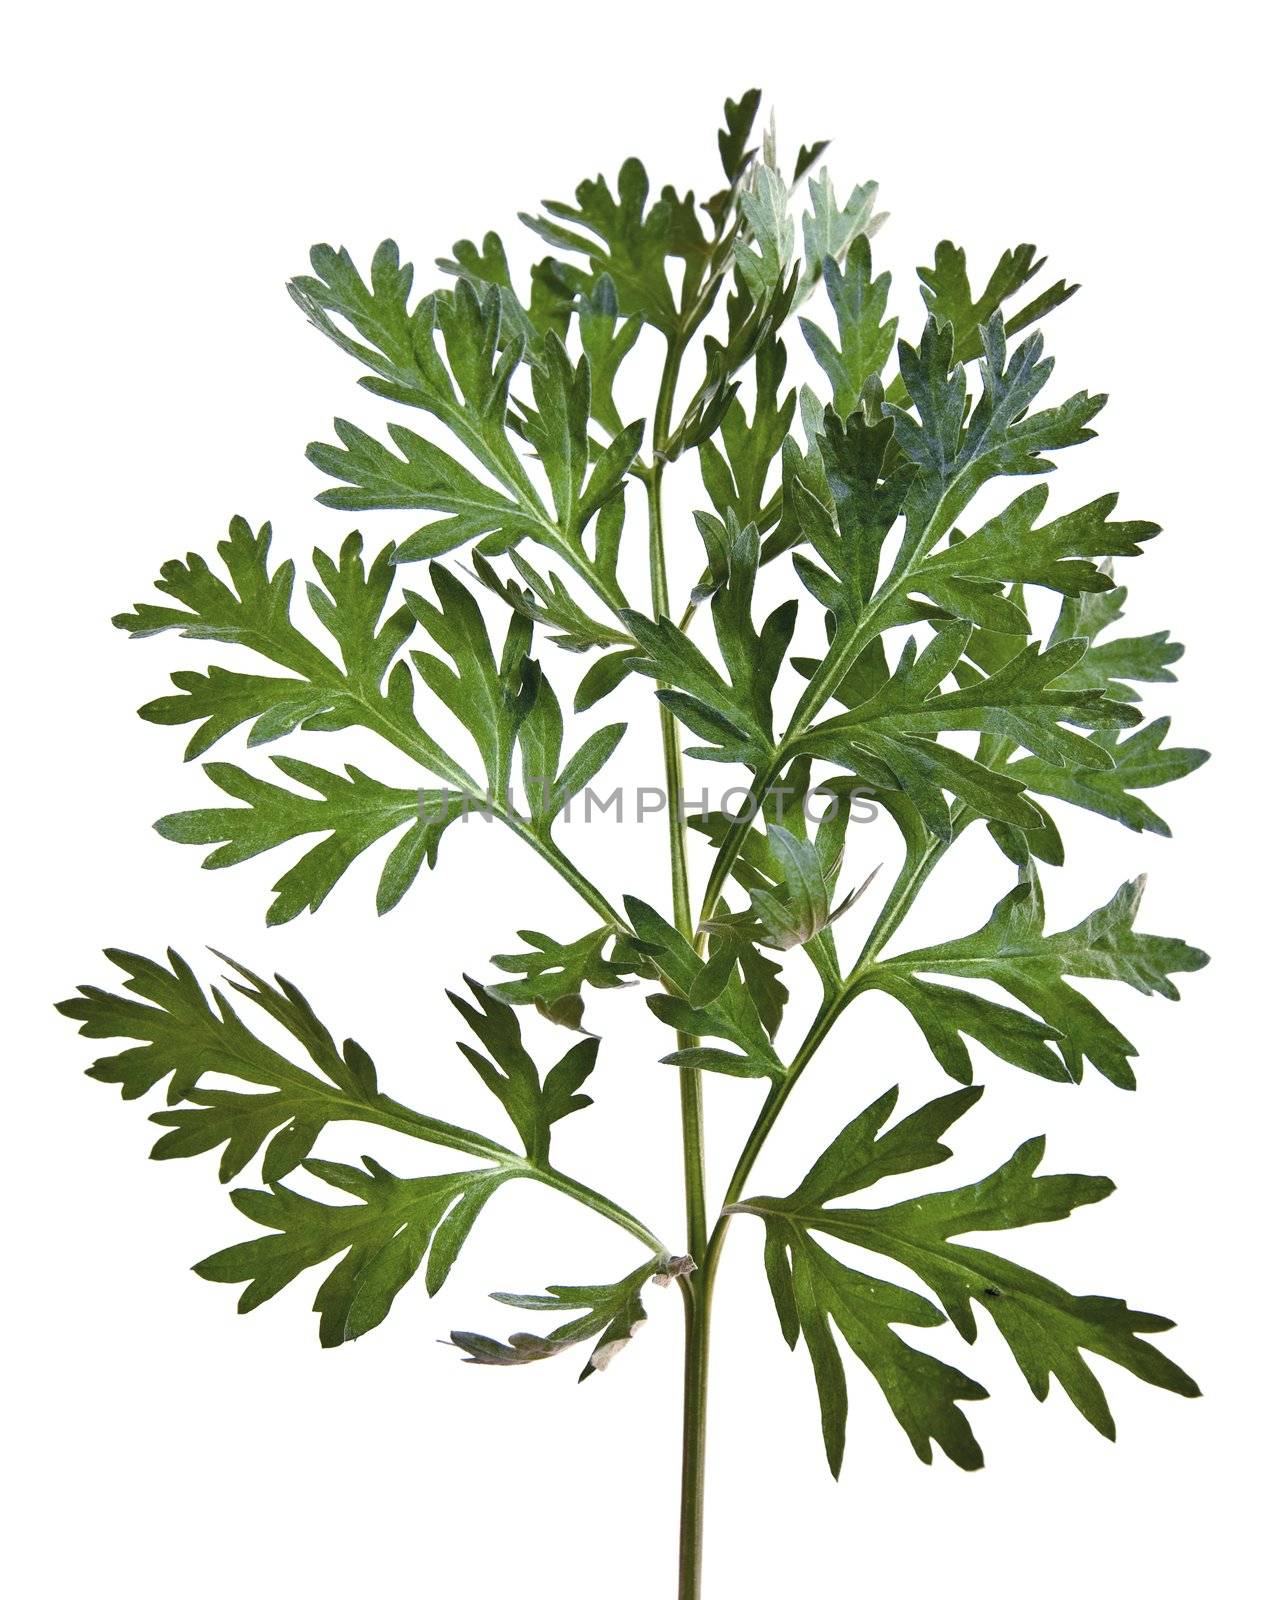 Common Wormwood (Artemisia absinthium) by rbiedermann